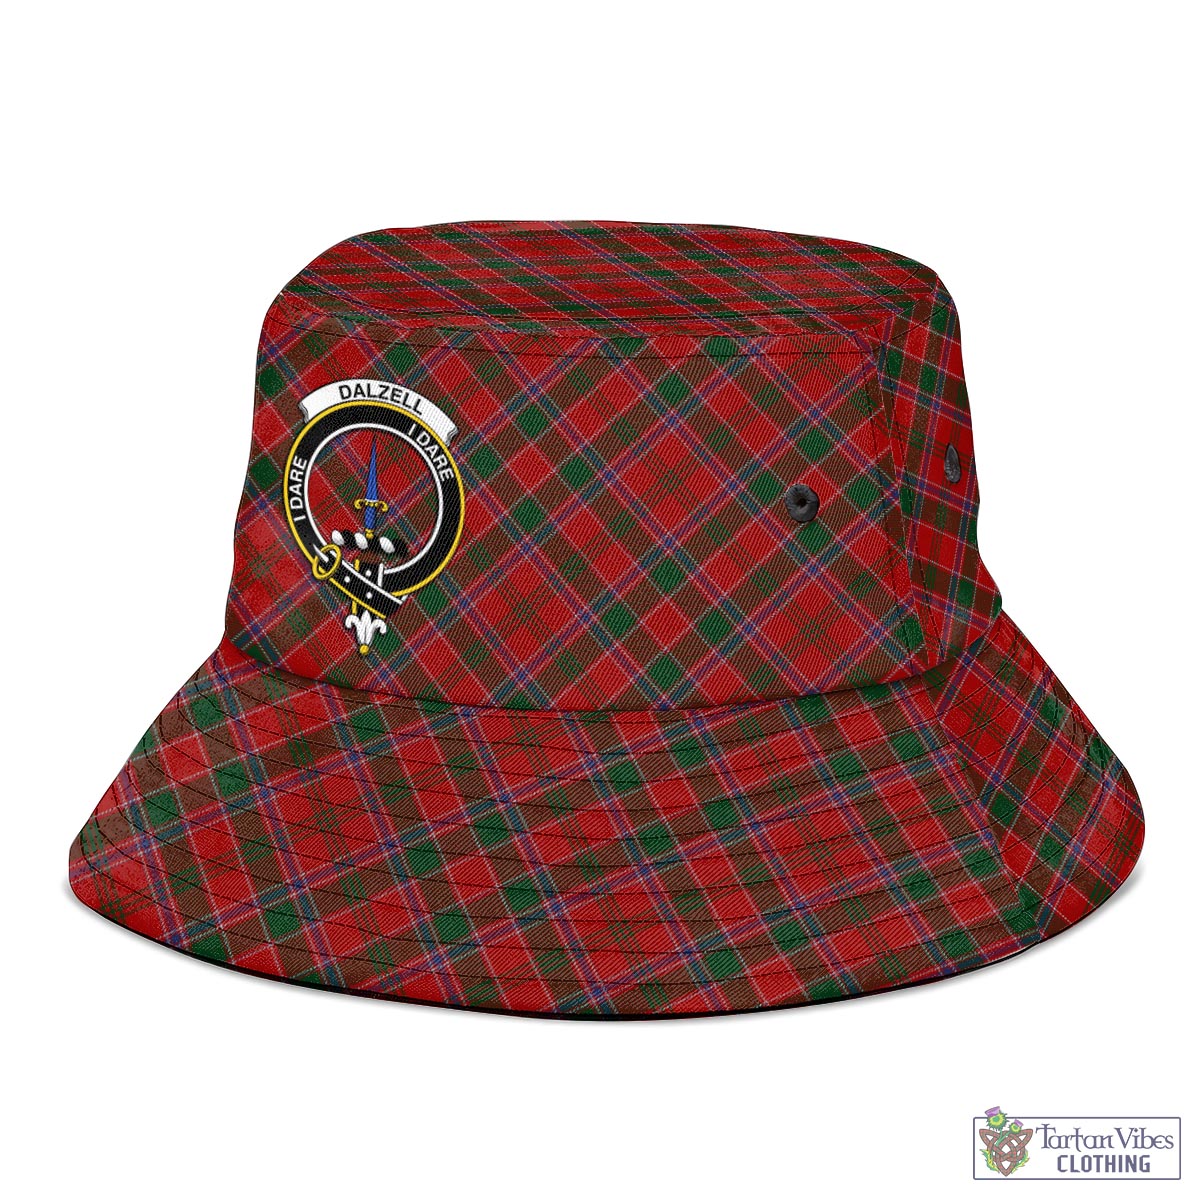 Tartan Vibes Clothing Dalzell (Dalziel) Tartan Bucket Hat with Family Crest